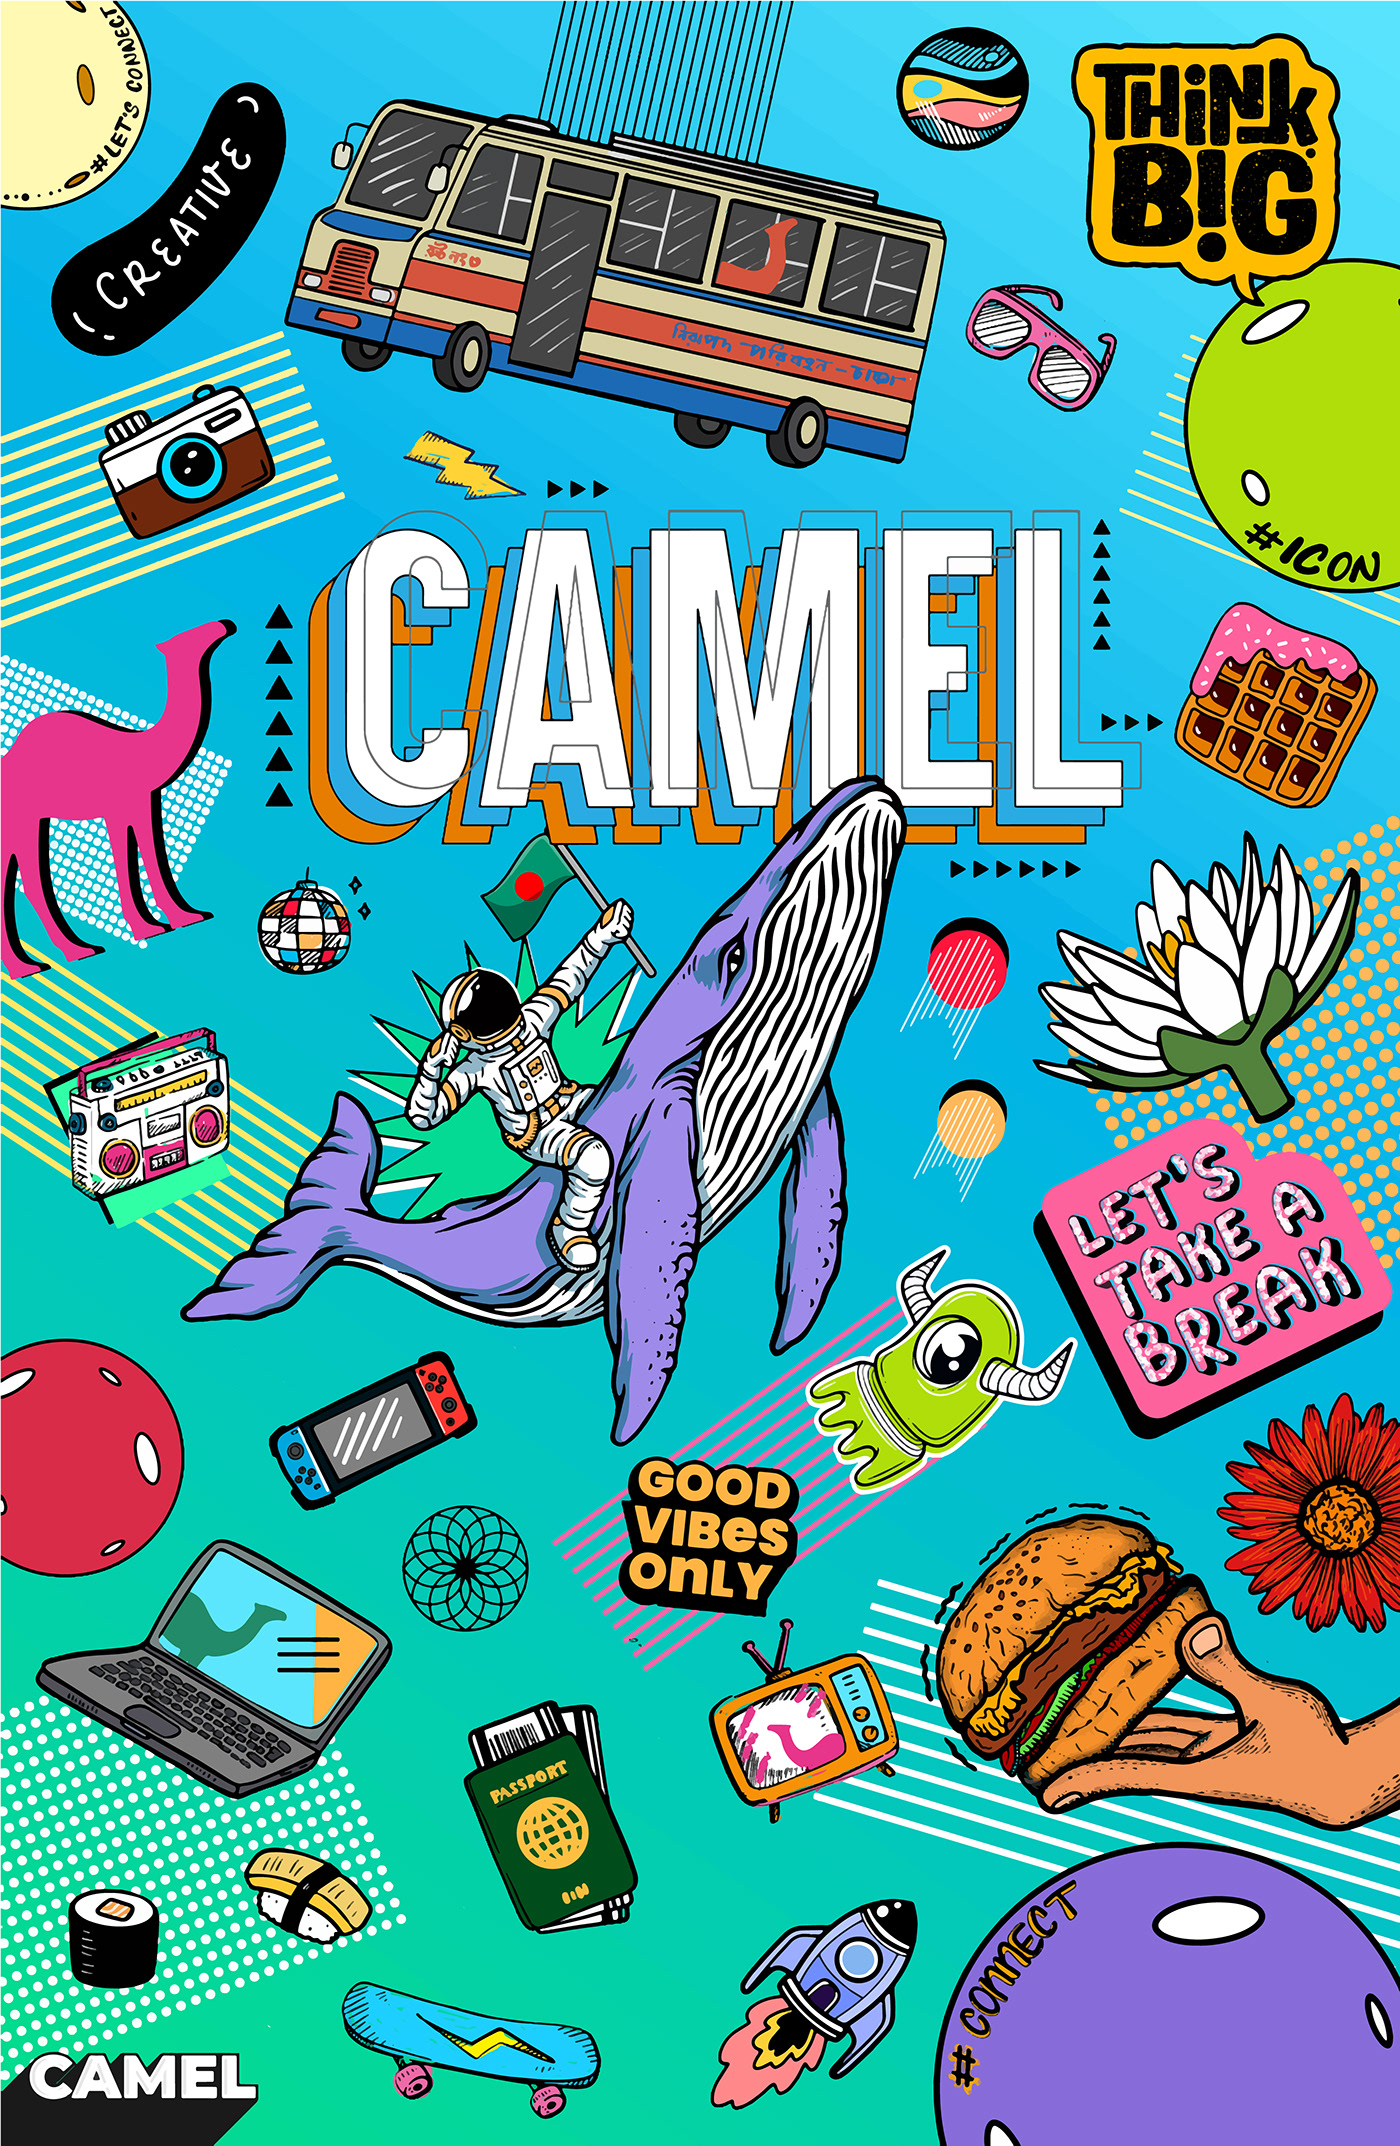 camel cigarette posm cartoon network graphic design 